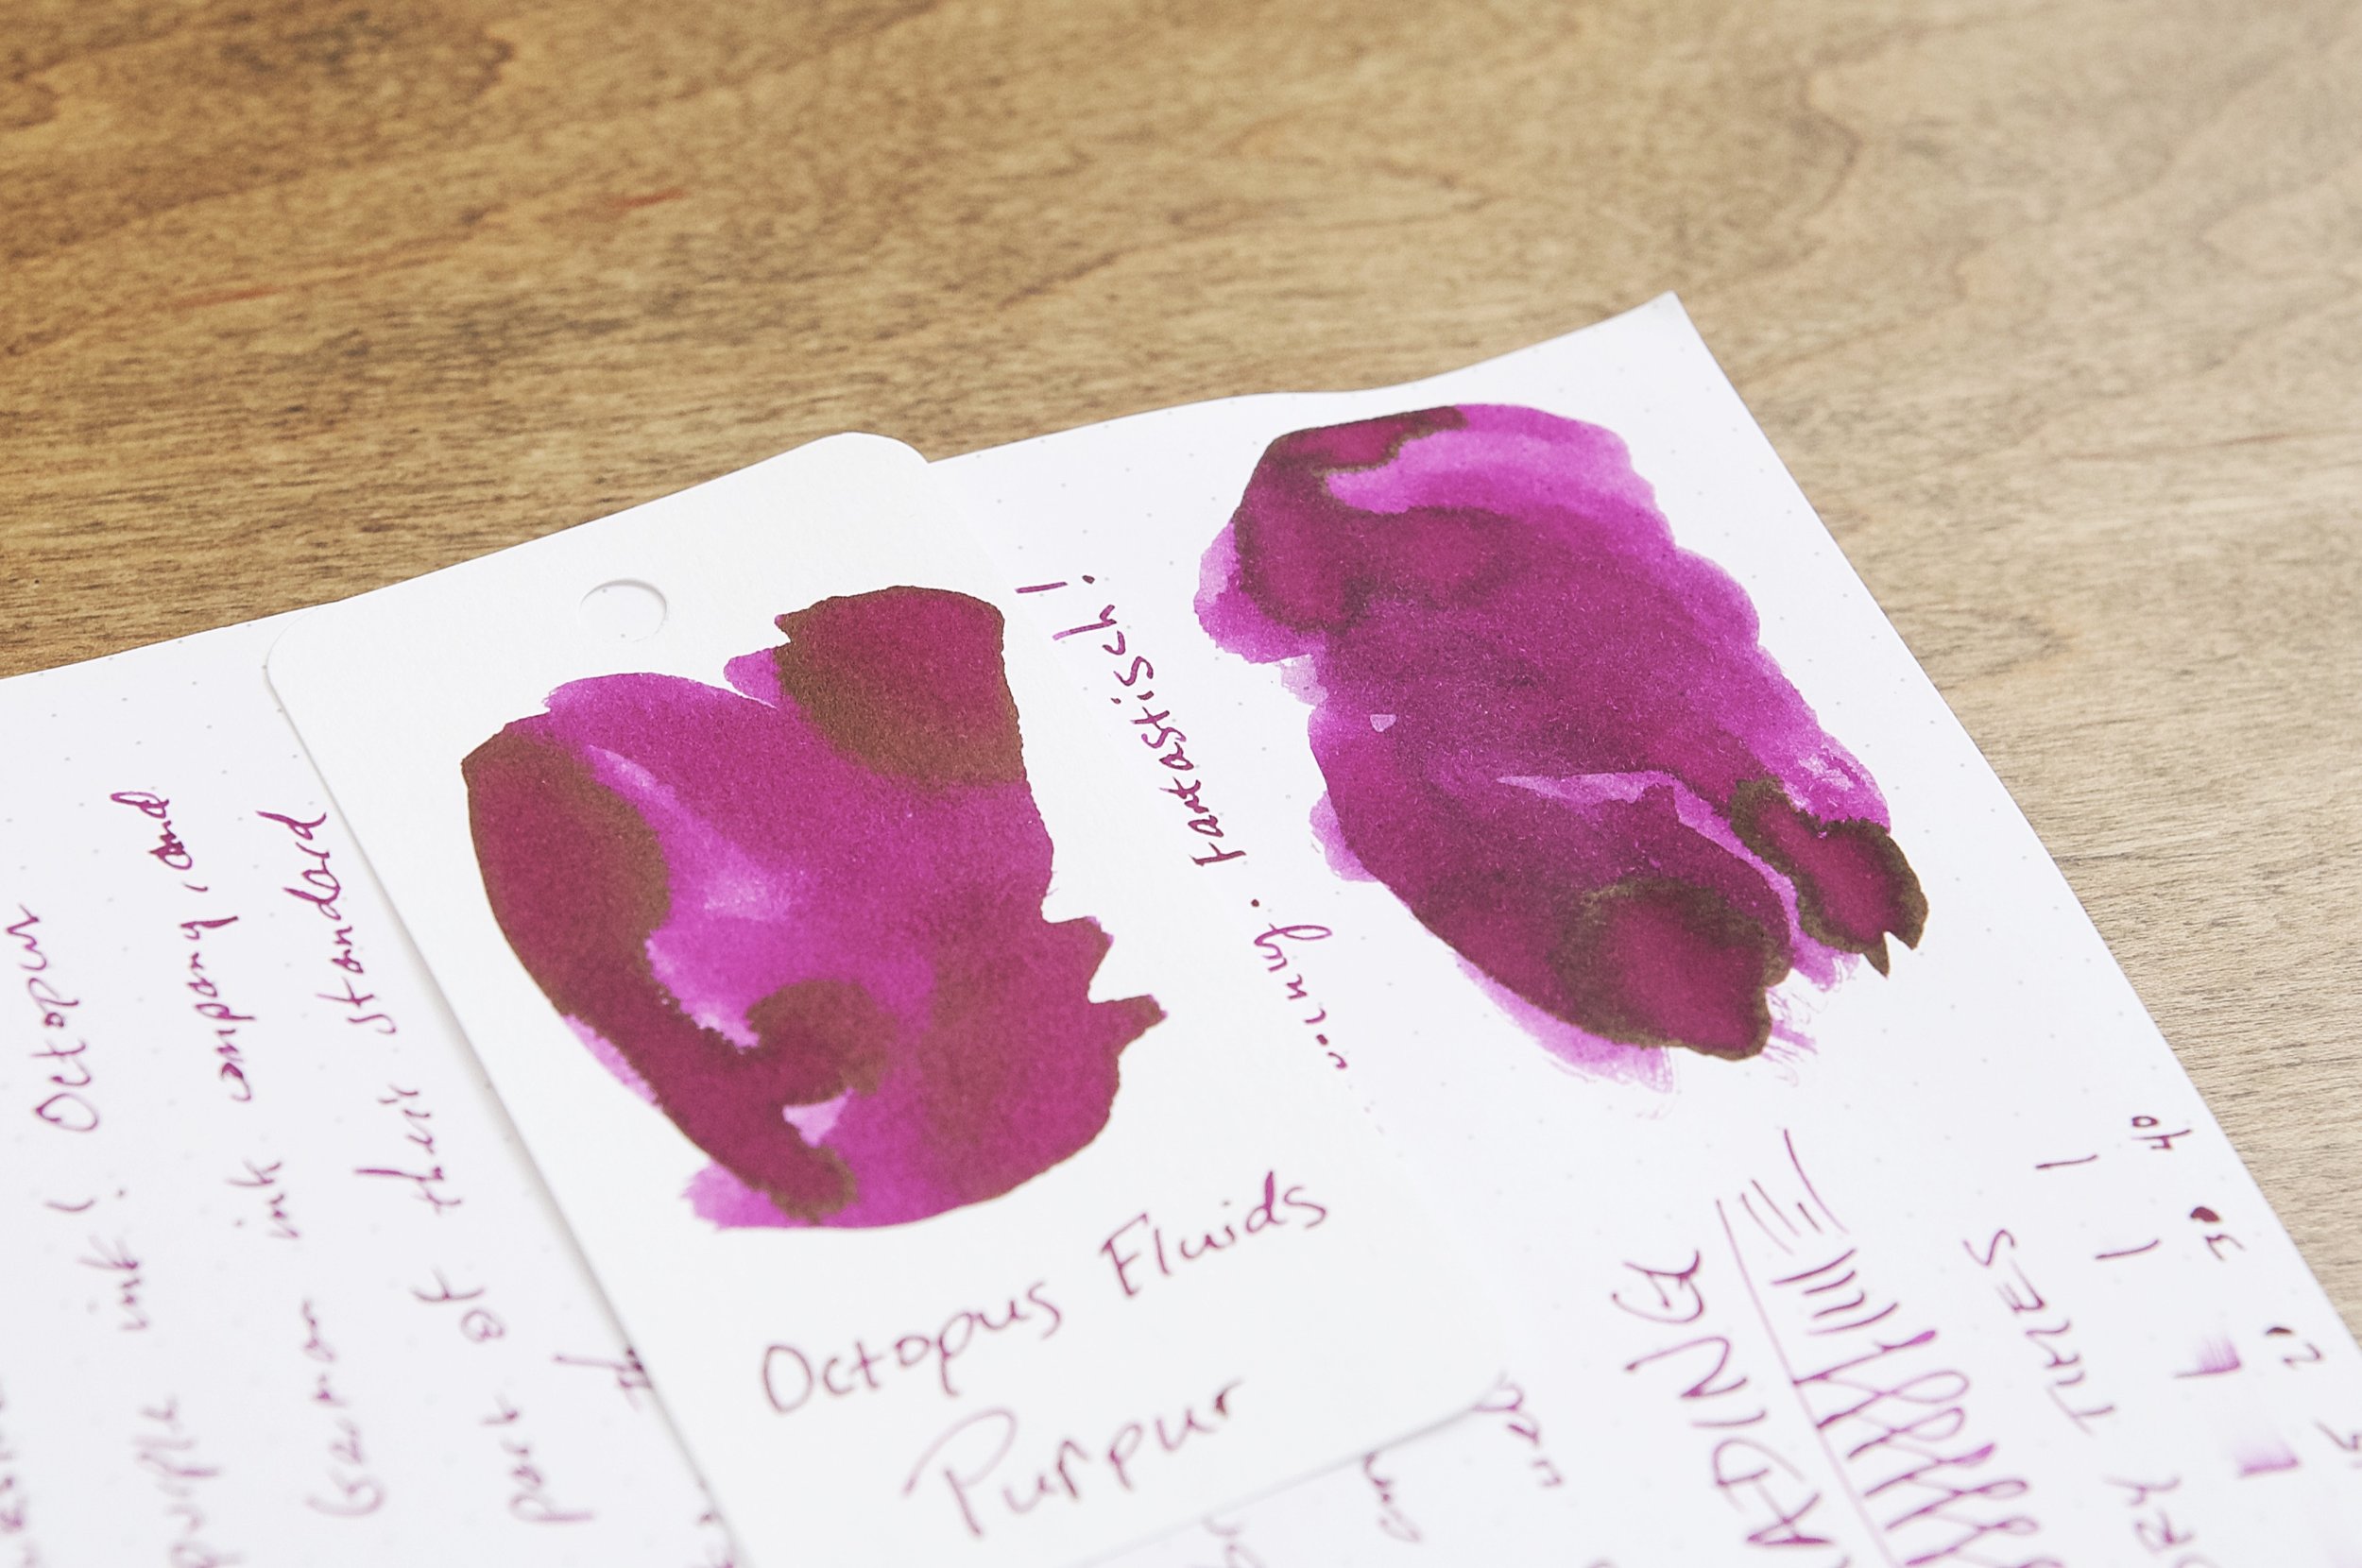 Octopus Fluids Purpur Ink Review — The Pen Addict